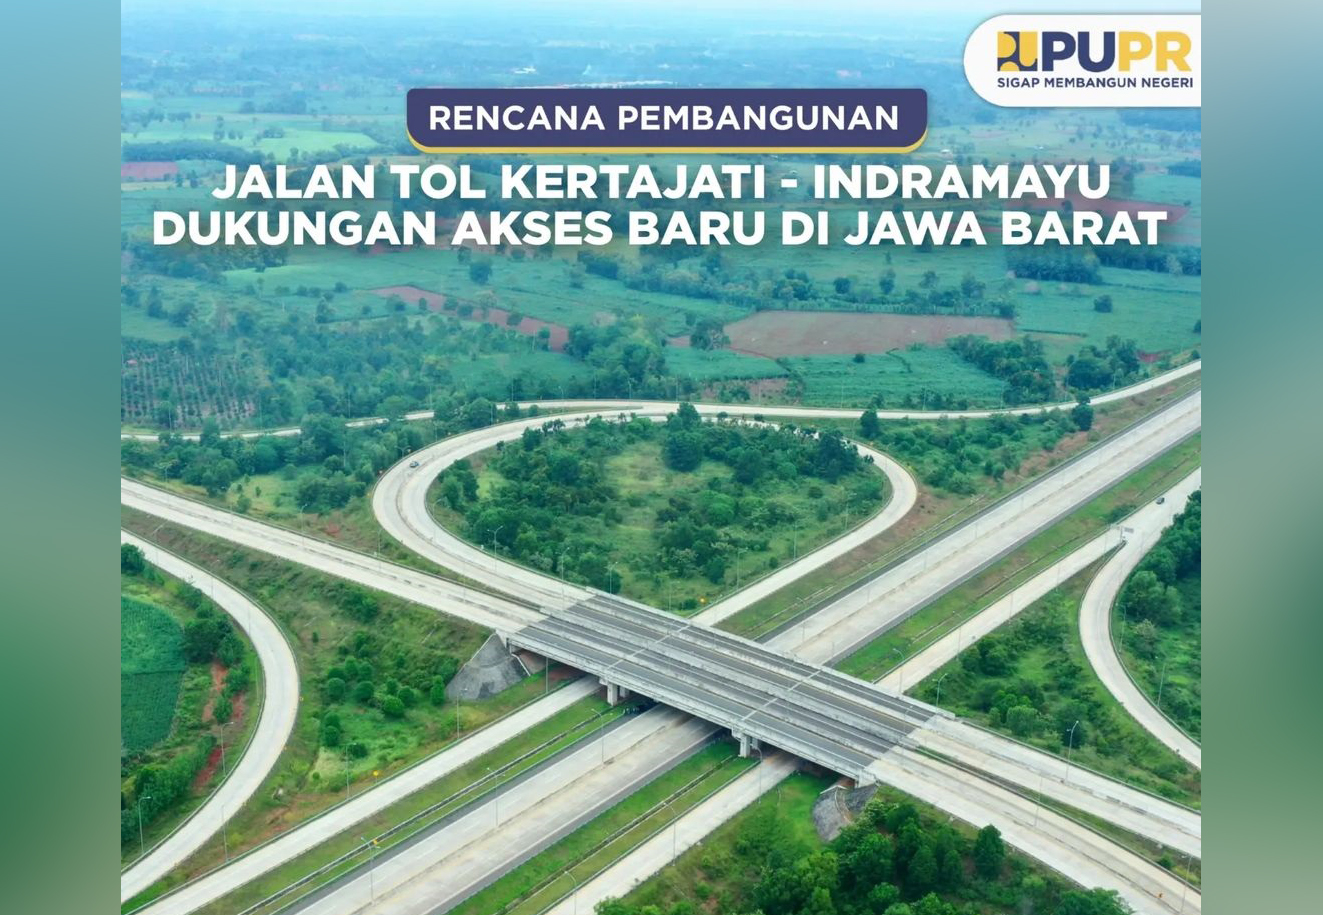 Inilah Syarat dari Presiden Jokowi Jika Kepala Daerah Mengajukan Pembangunan Jalan Tol